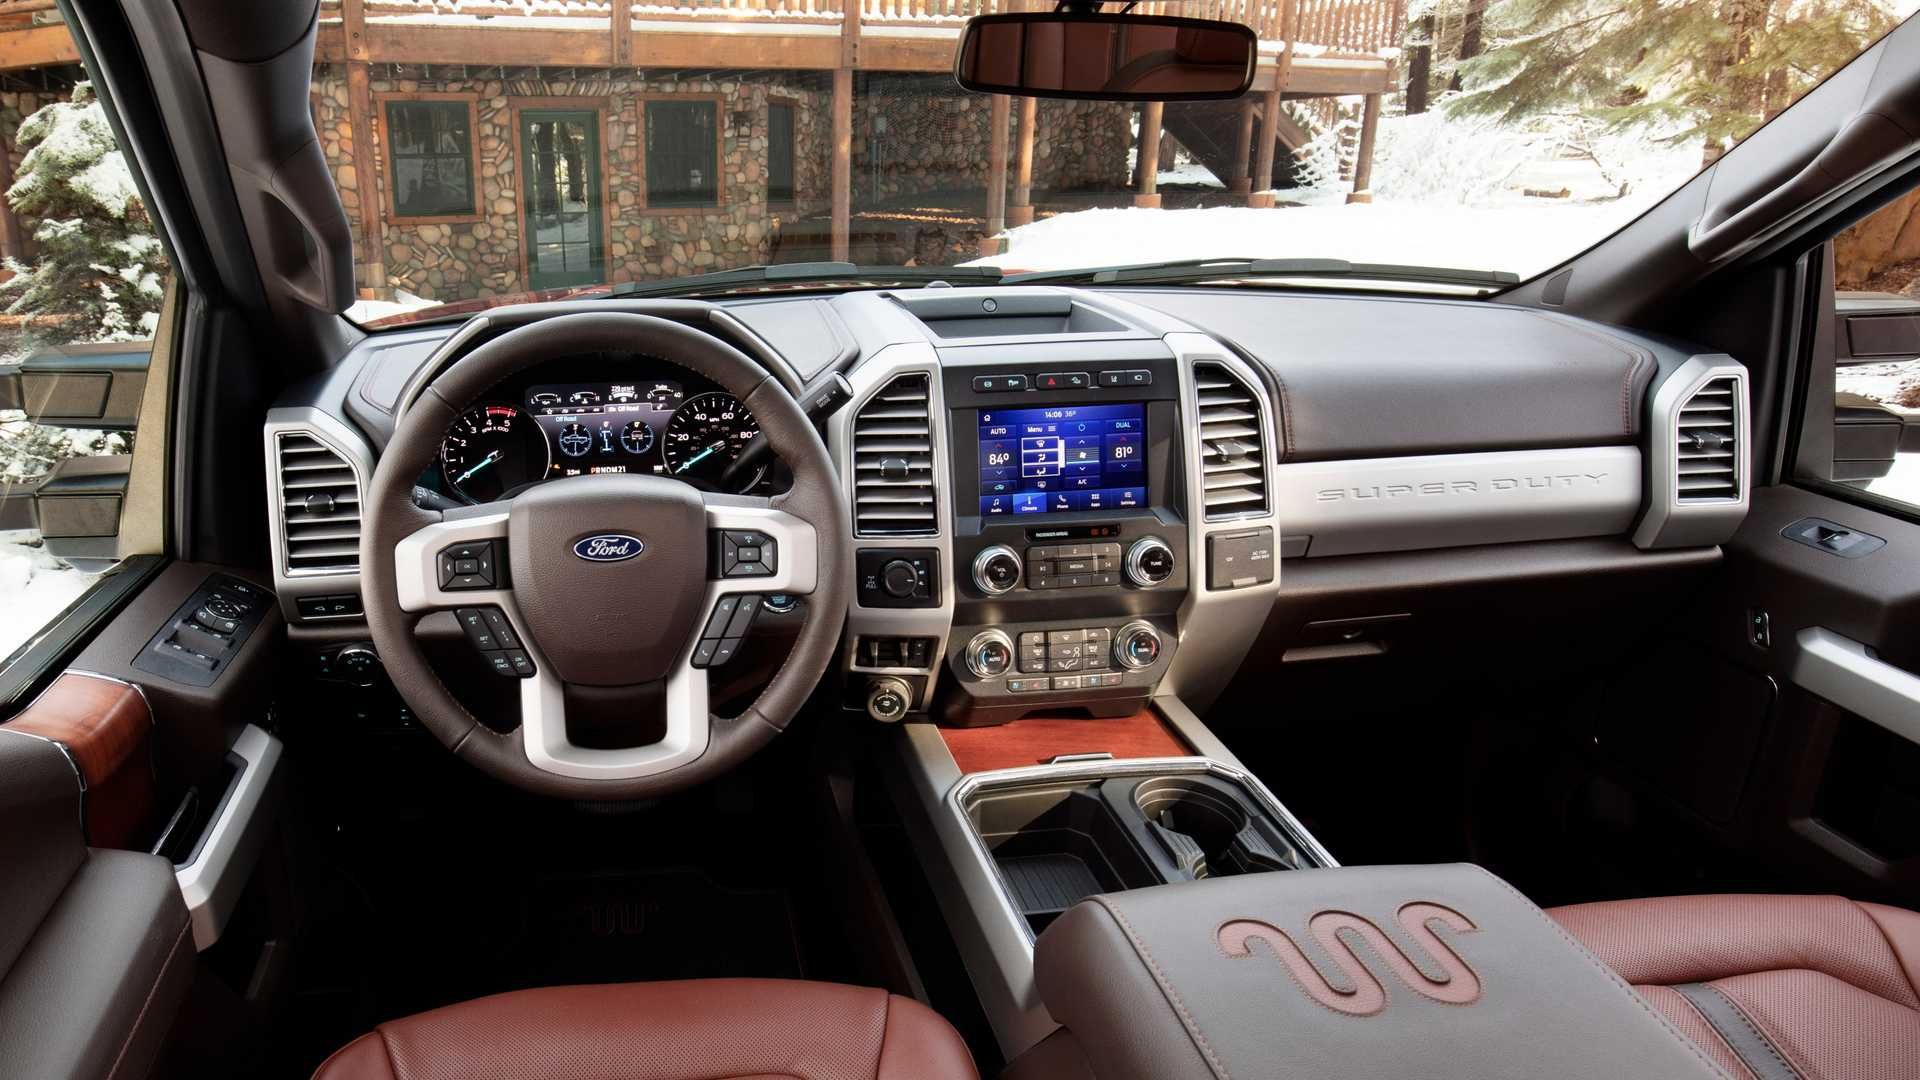 2020 Ford Super Duty / وانت پیکاپ فورد سوپردیوتی